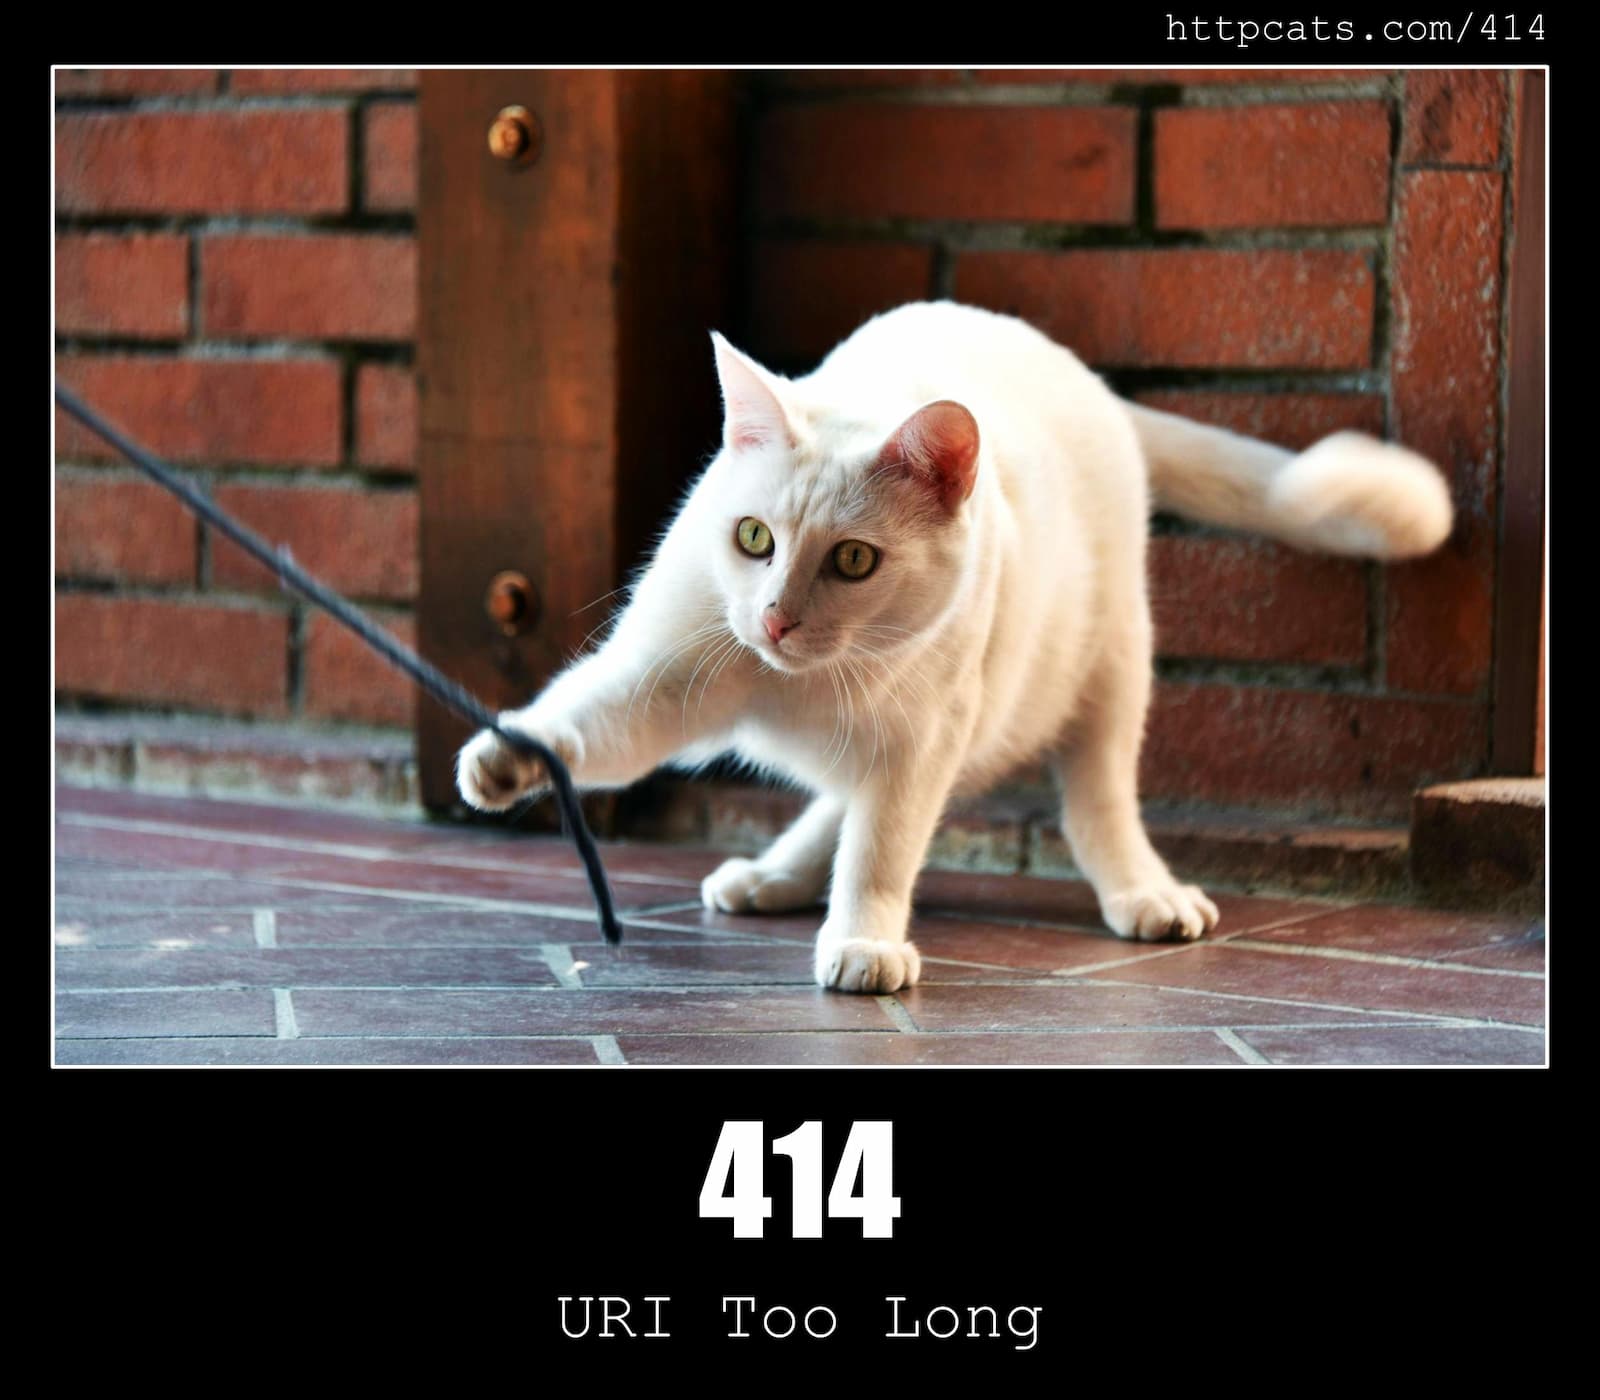 HTTP Status Code 414 URI Too Long & Cats